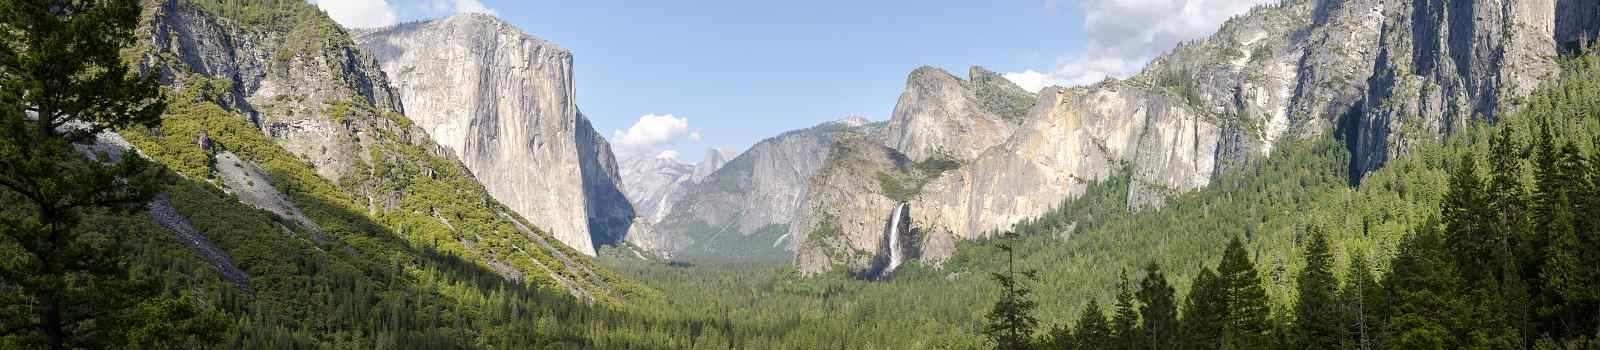 HOHE-PUNKT-WESTEN  Yosemite NationalPark with Bridalveil waterfall 111147029